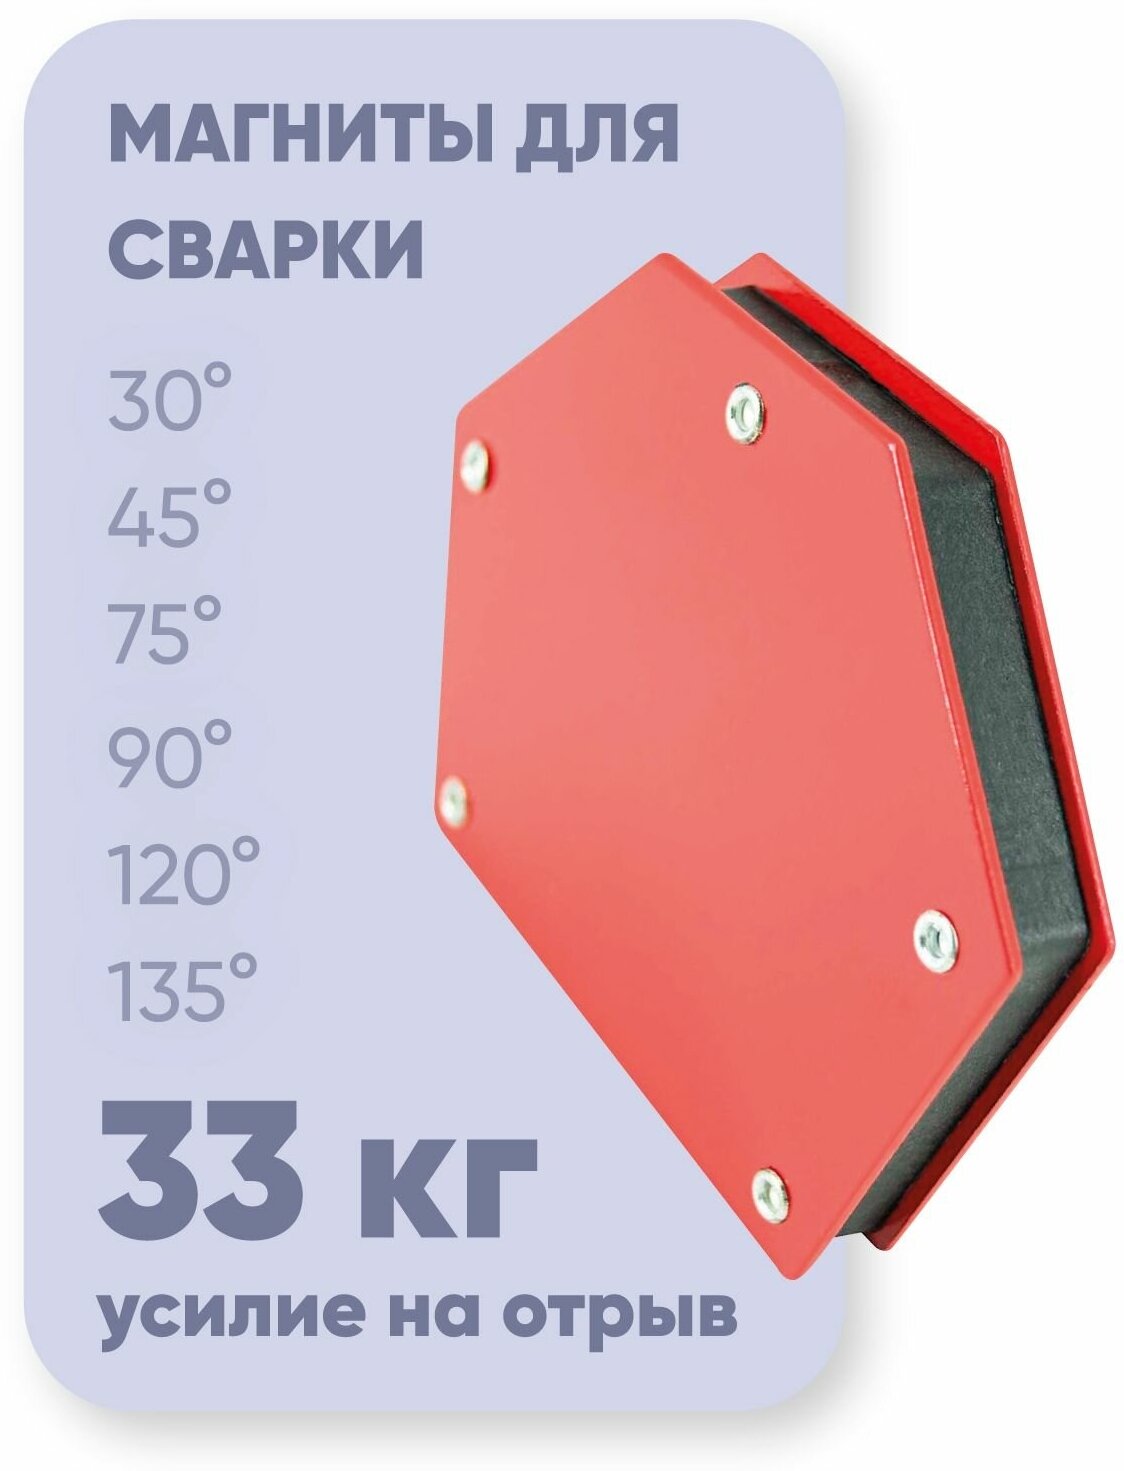 Магнитный уголок для сварки / магнит для сварки CET WMD75 33 кг угол 30 45 75 90 120 135 град.